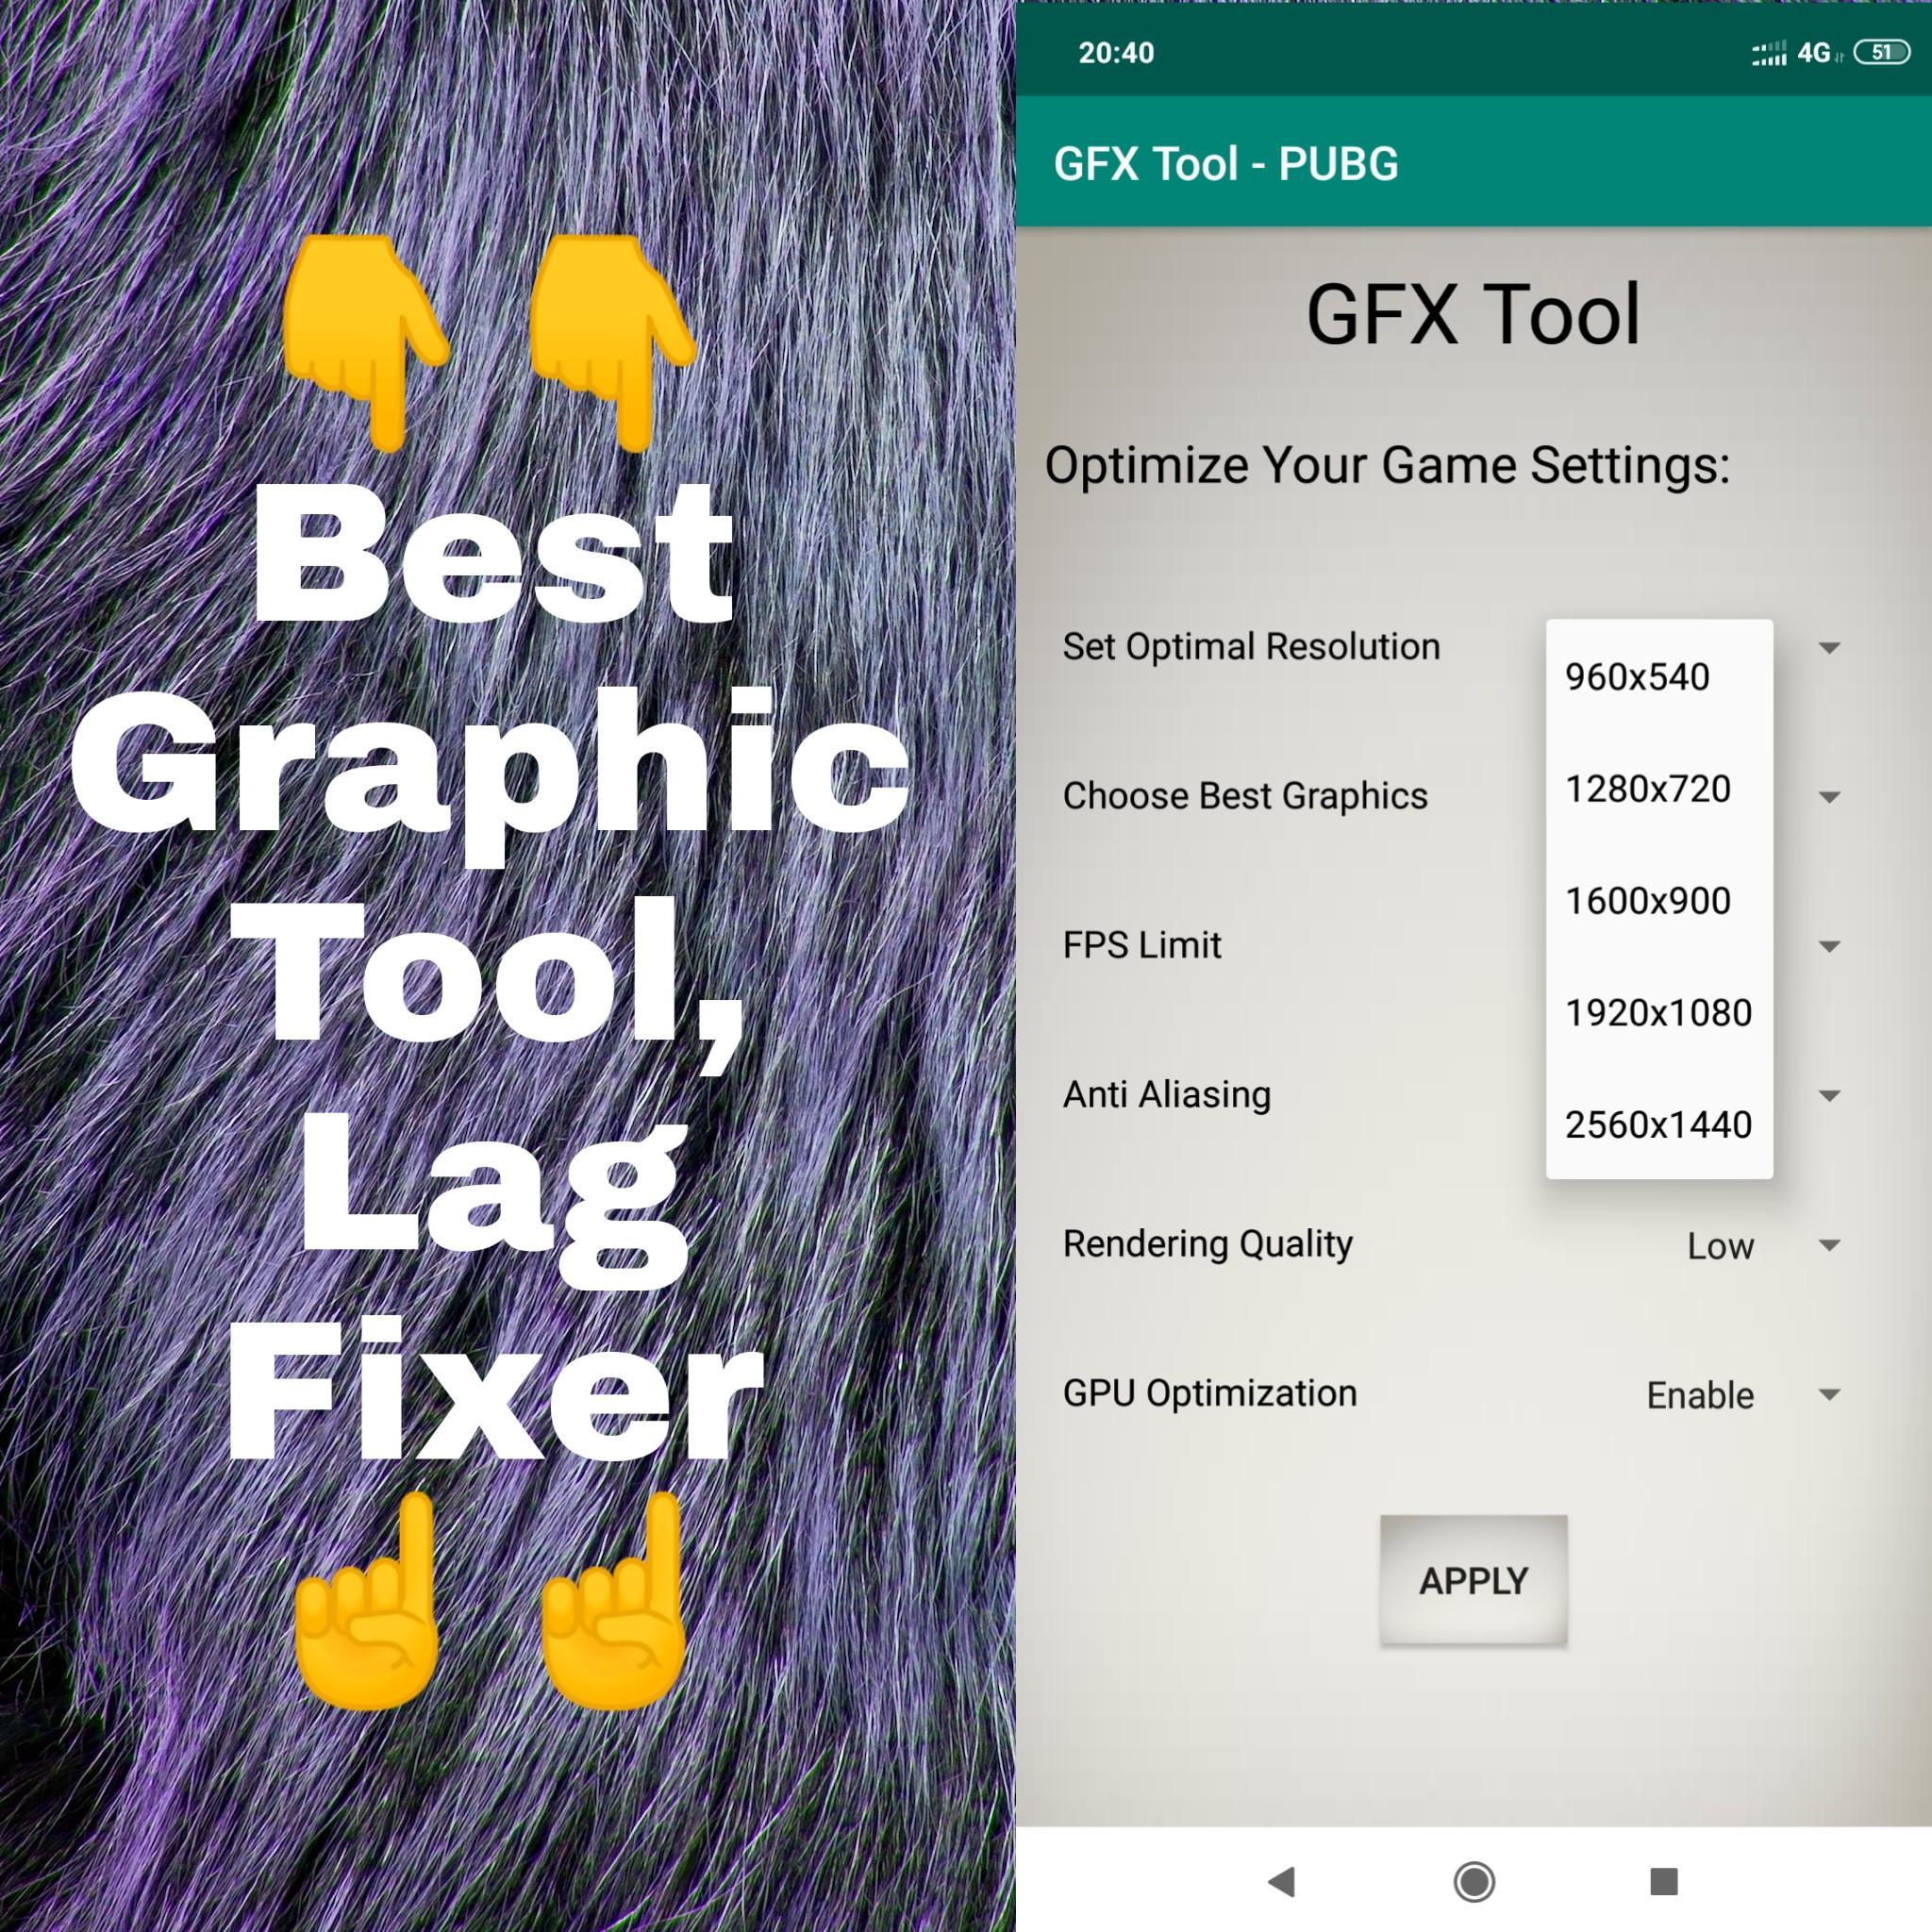 Gfx tool последняя версия. GFX Tool PUBG. Настройка GFX Tool для PUBG mobile. GFX Tool приложение PUBG. GFX Tool for PUBG - game Launcher & Optimizer.